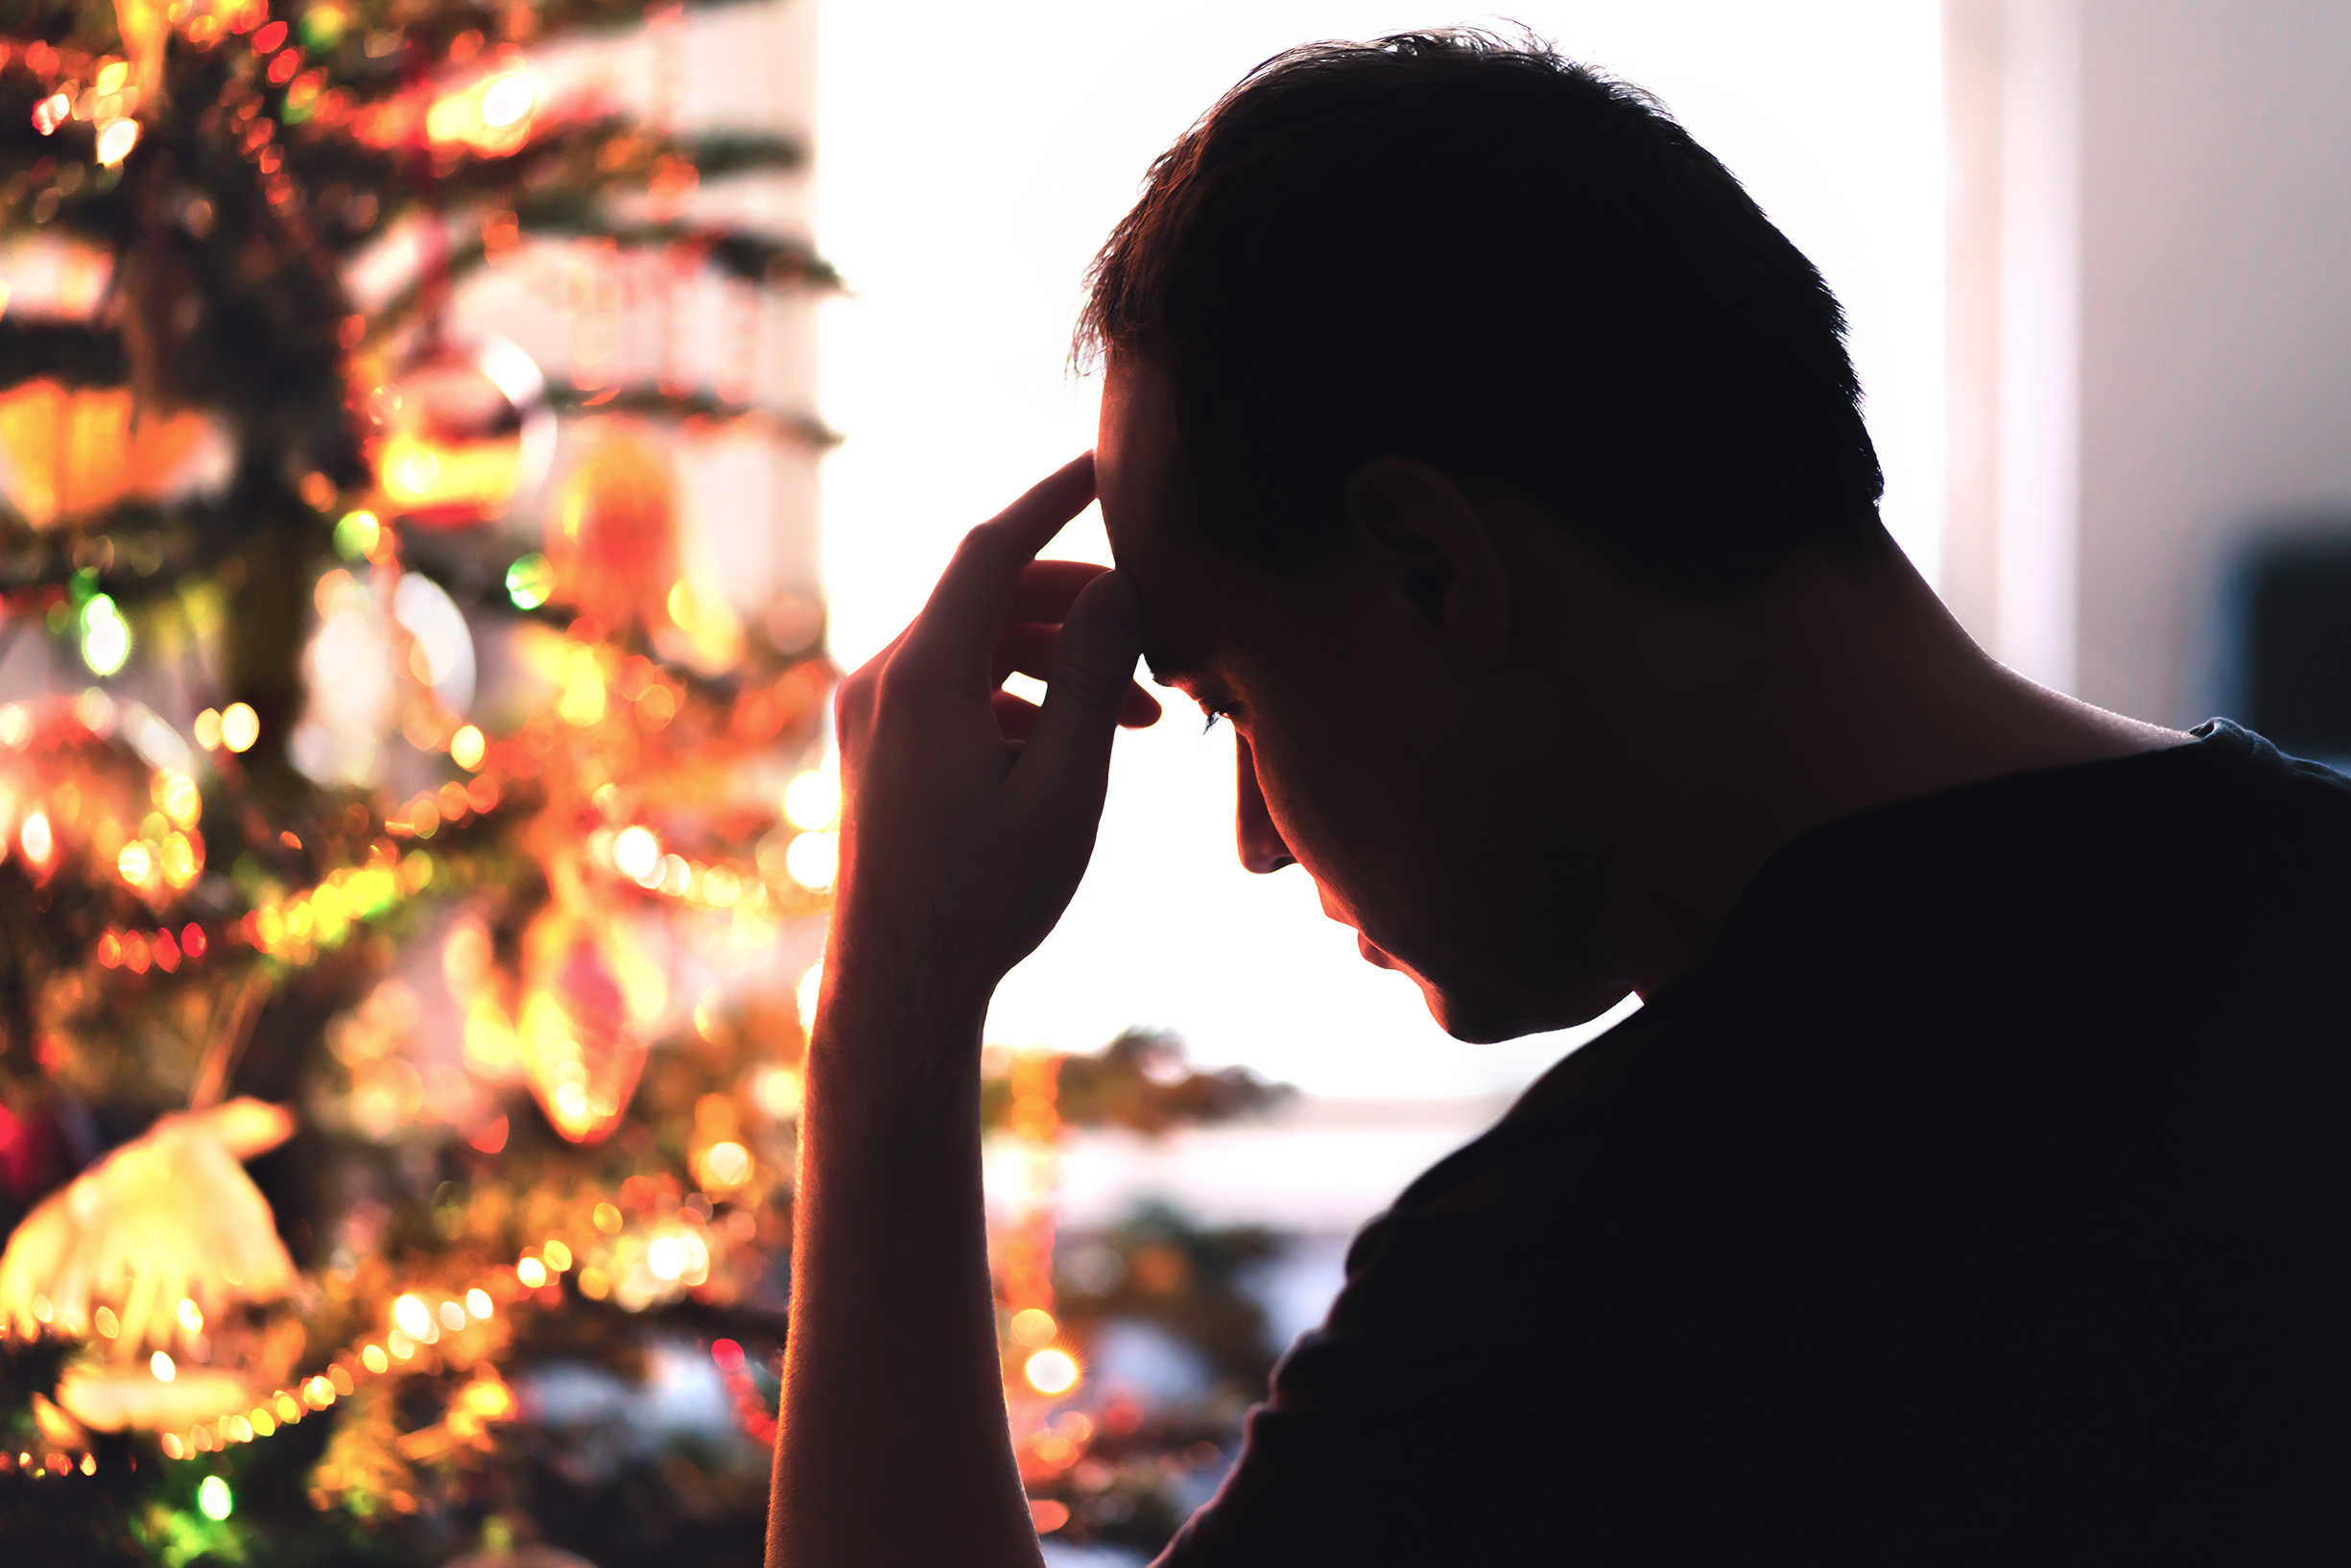 Profile of an upset man | Source: Shutterstock